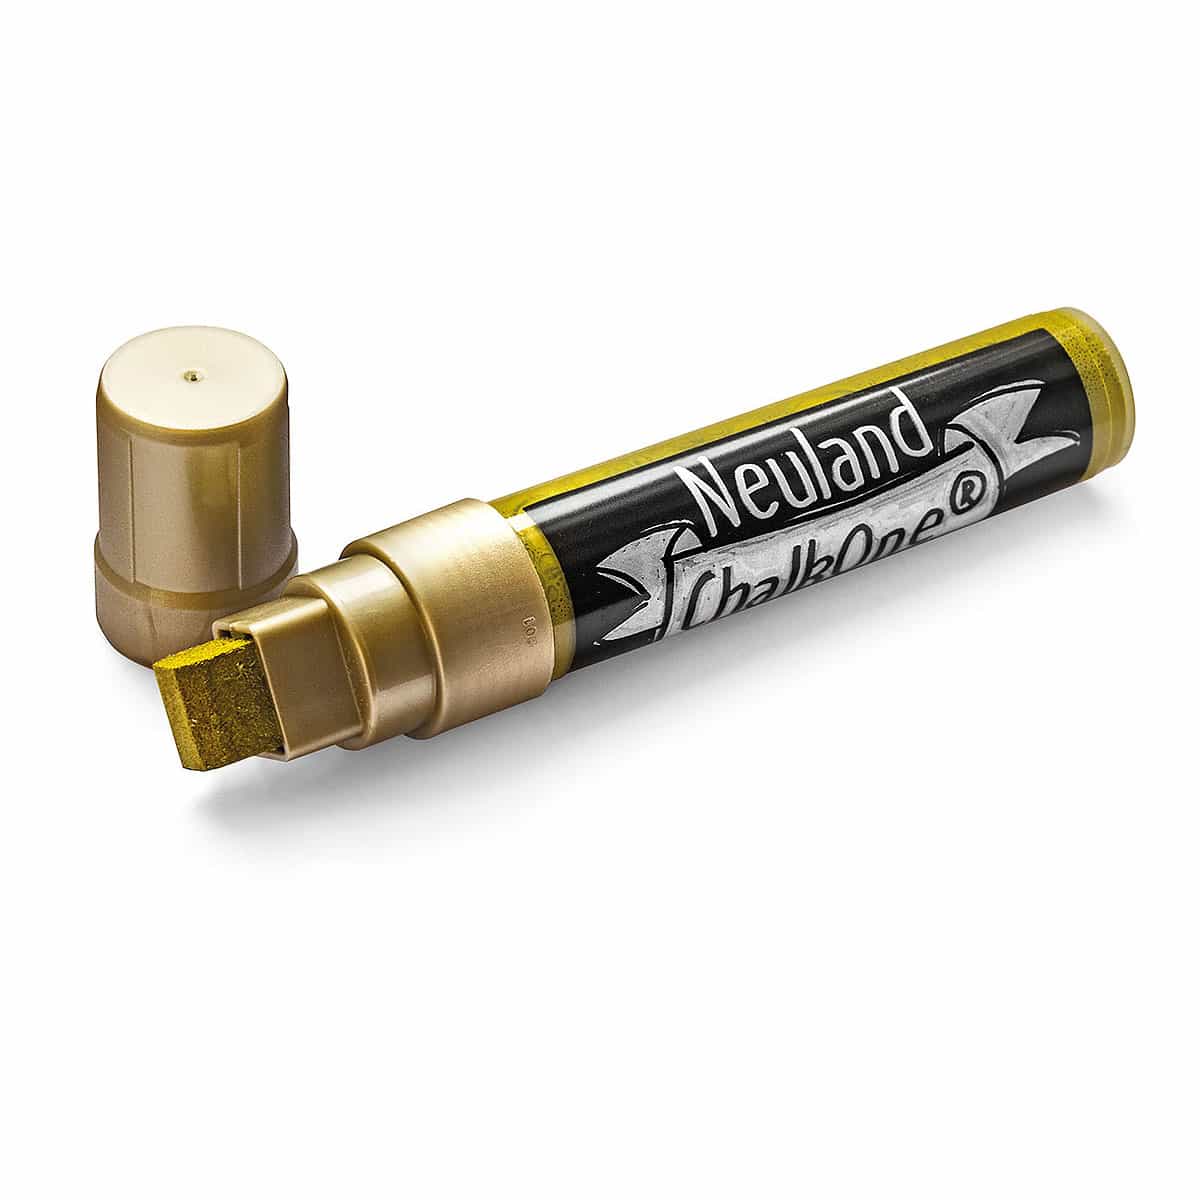 Neuland ChalkOne®, wedge nib 5-15 mm – single colors- c554 gold